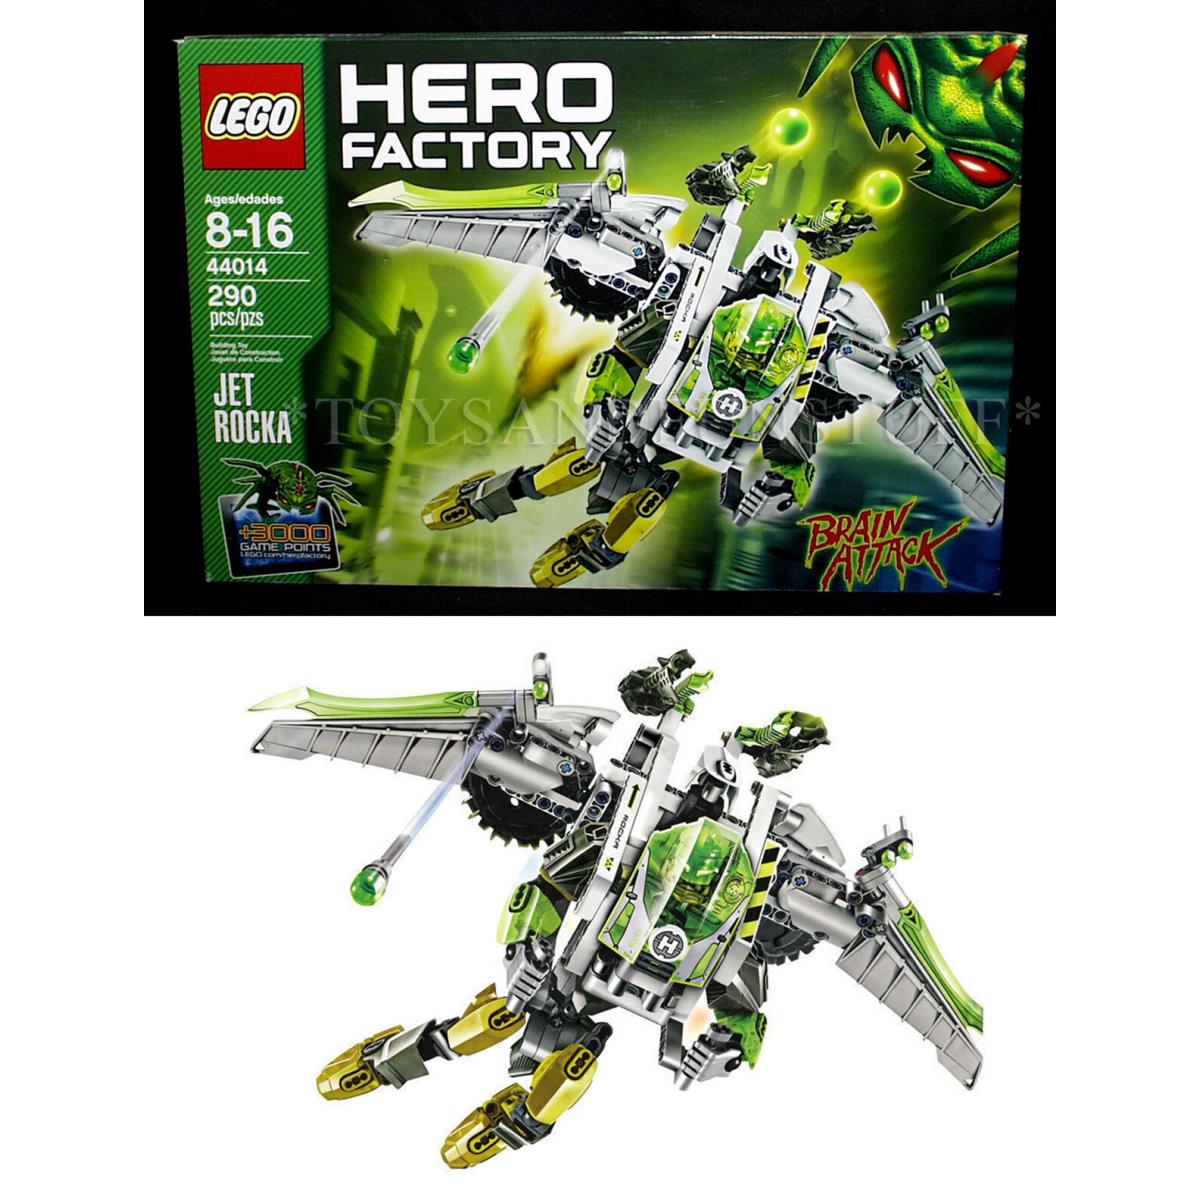 Jet Rocka Lego 44014 - Hero Factory - Building Set - Brain Attack